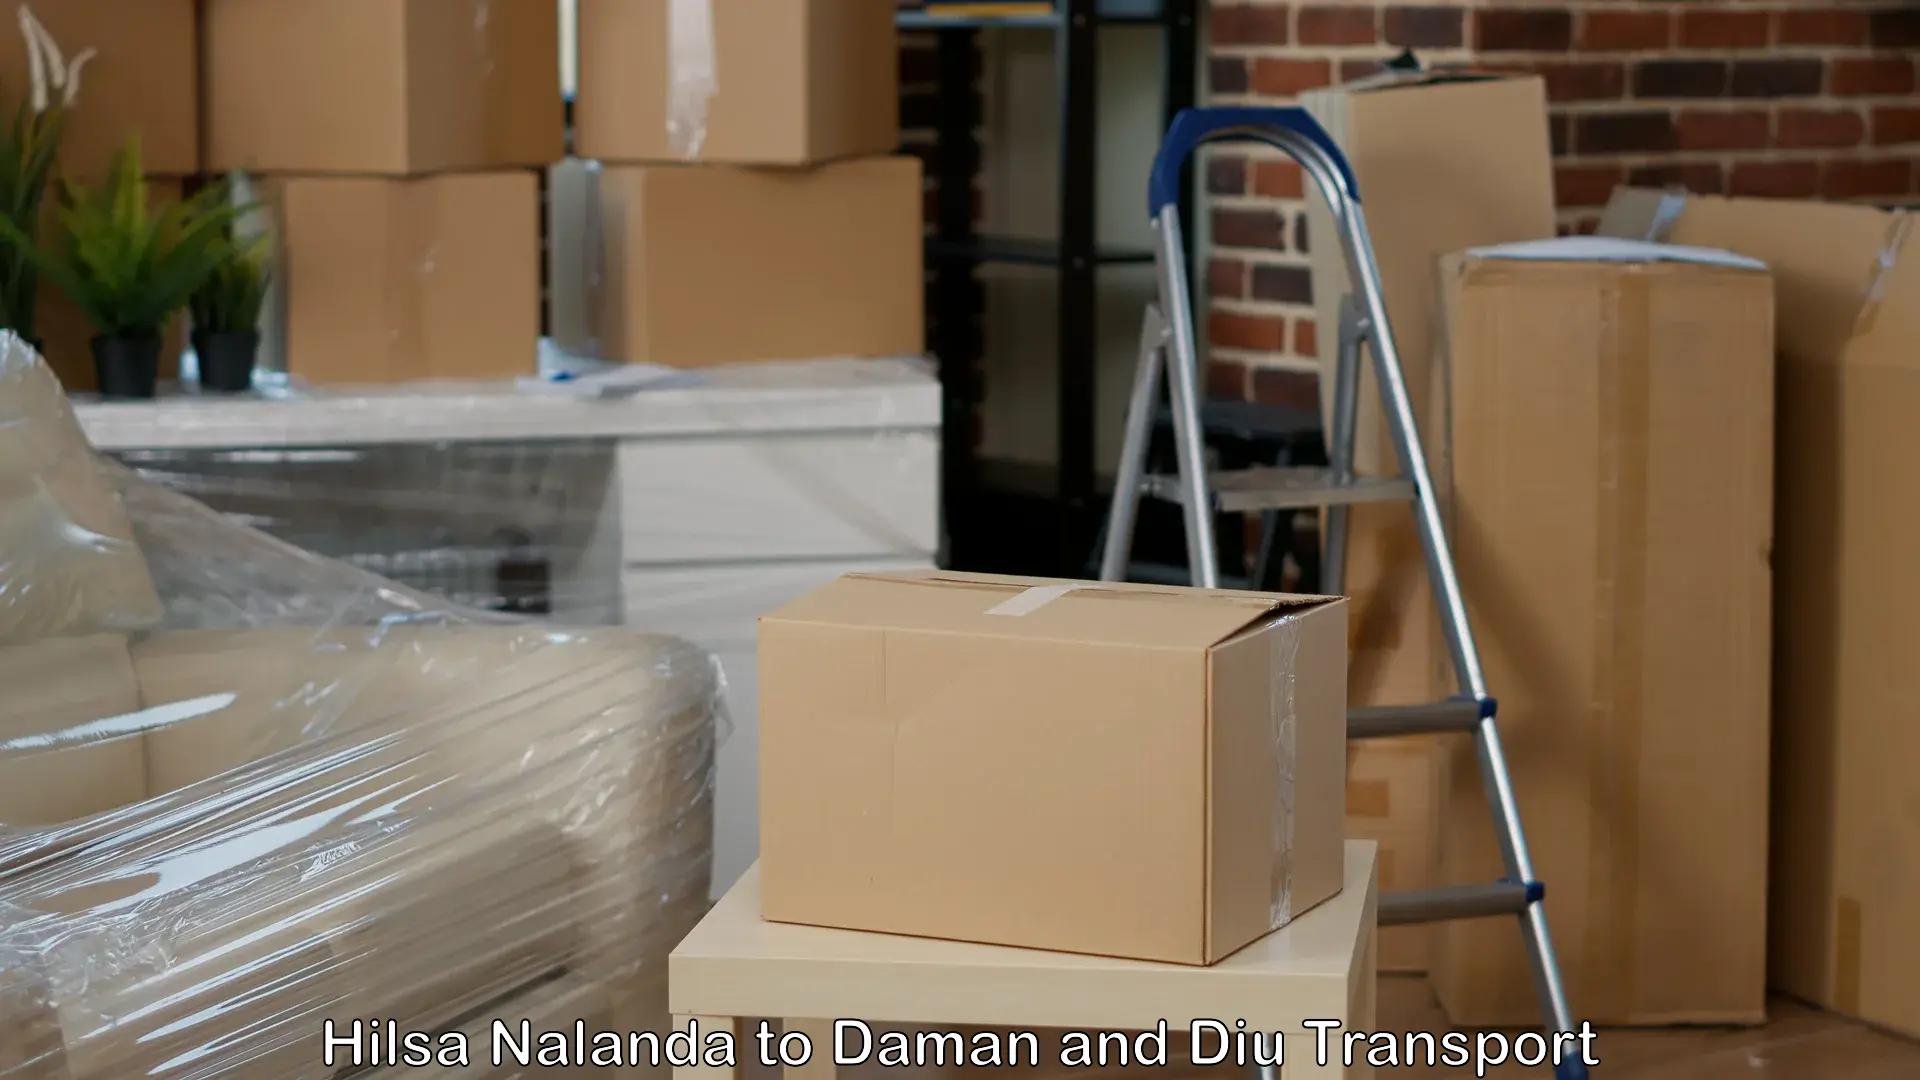 Delivery service Hilsa Nalanda to Daman